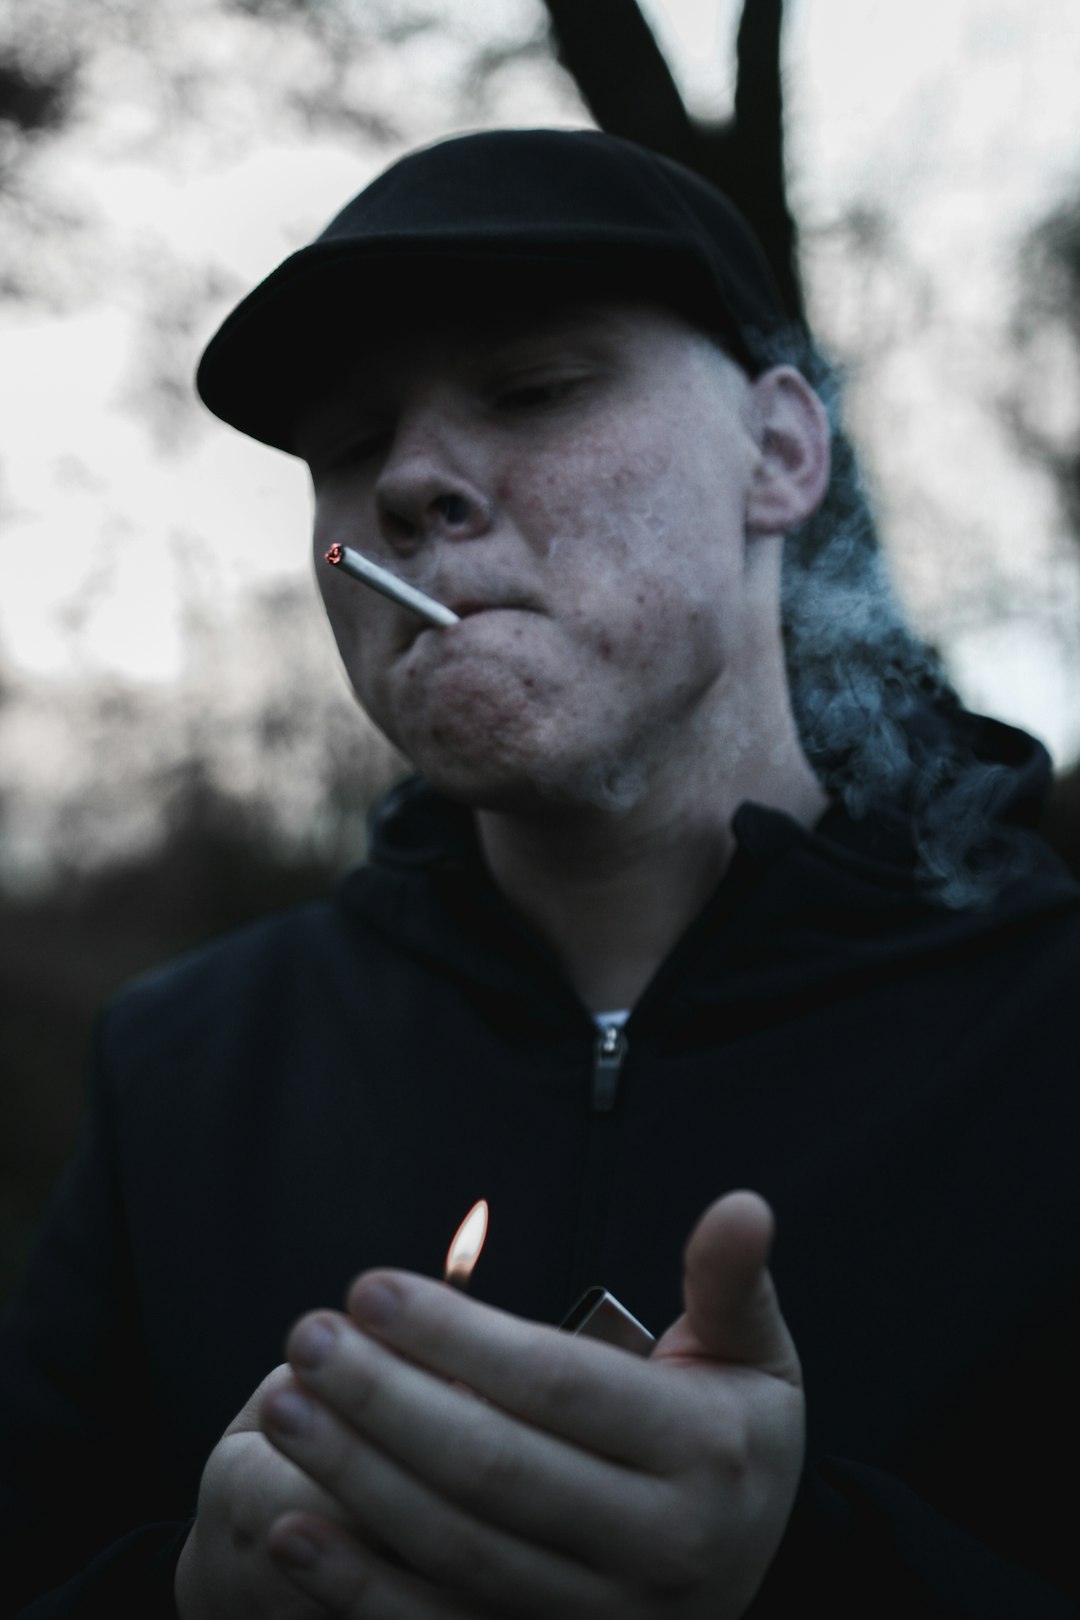 man wearing black zip-up jacket and black hat smoking cigarette stick while holding lighter